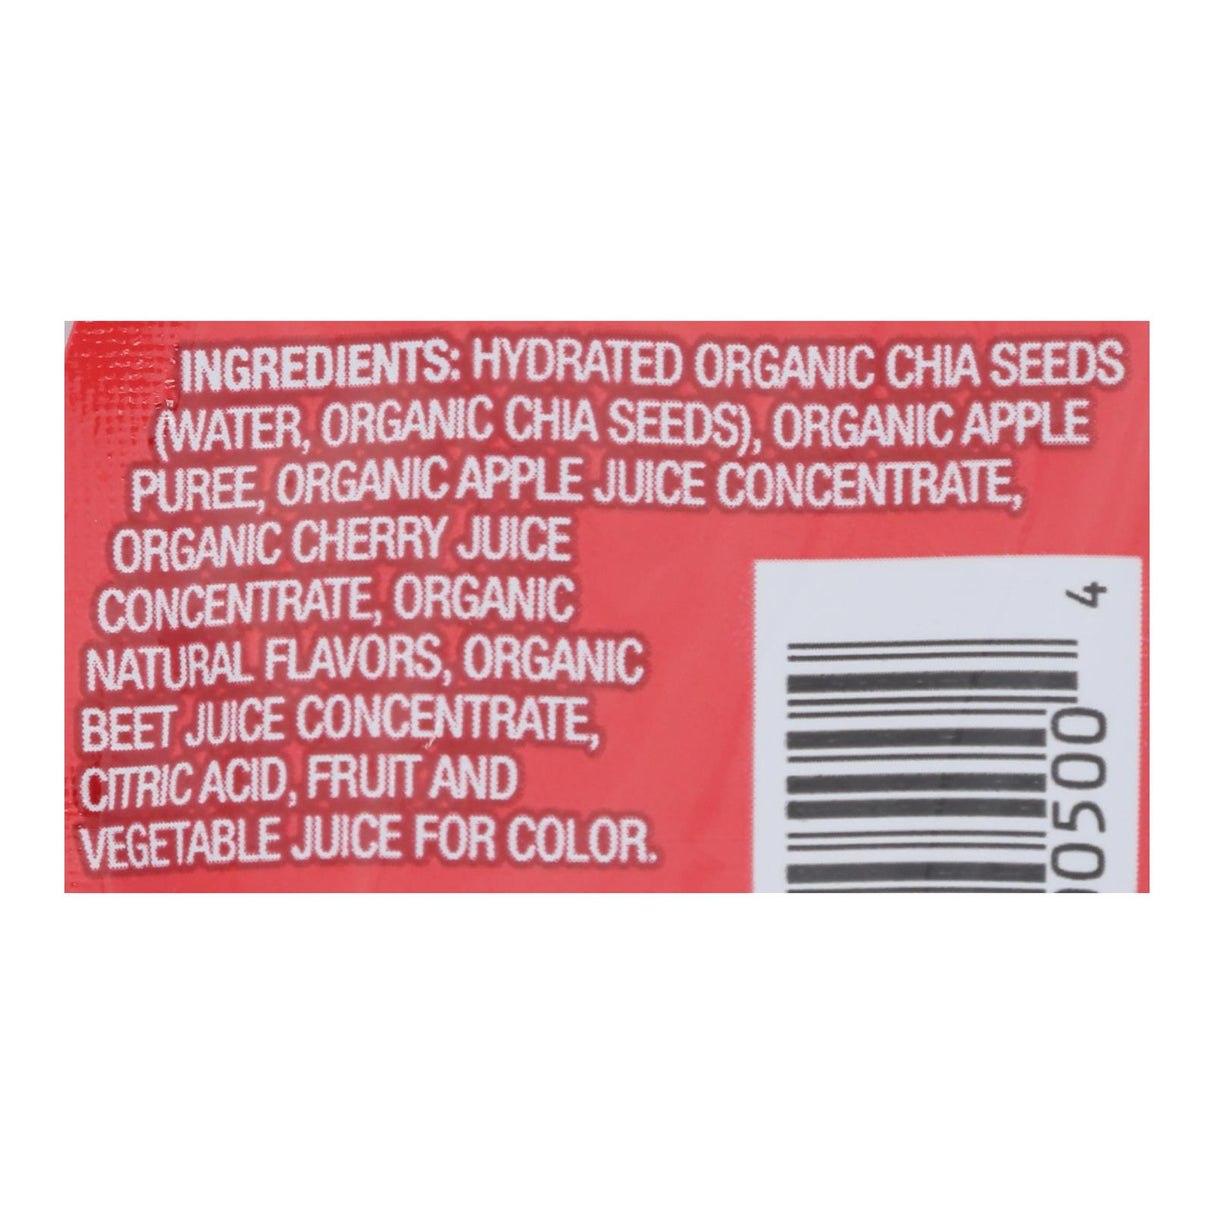 Mamma Chia Organic Chia Squeeze: Cherry Beet - 3.5 Oz (Pack of 16) - Cozy Farm 